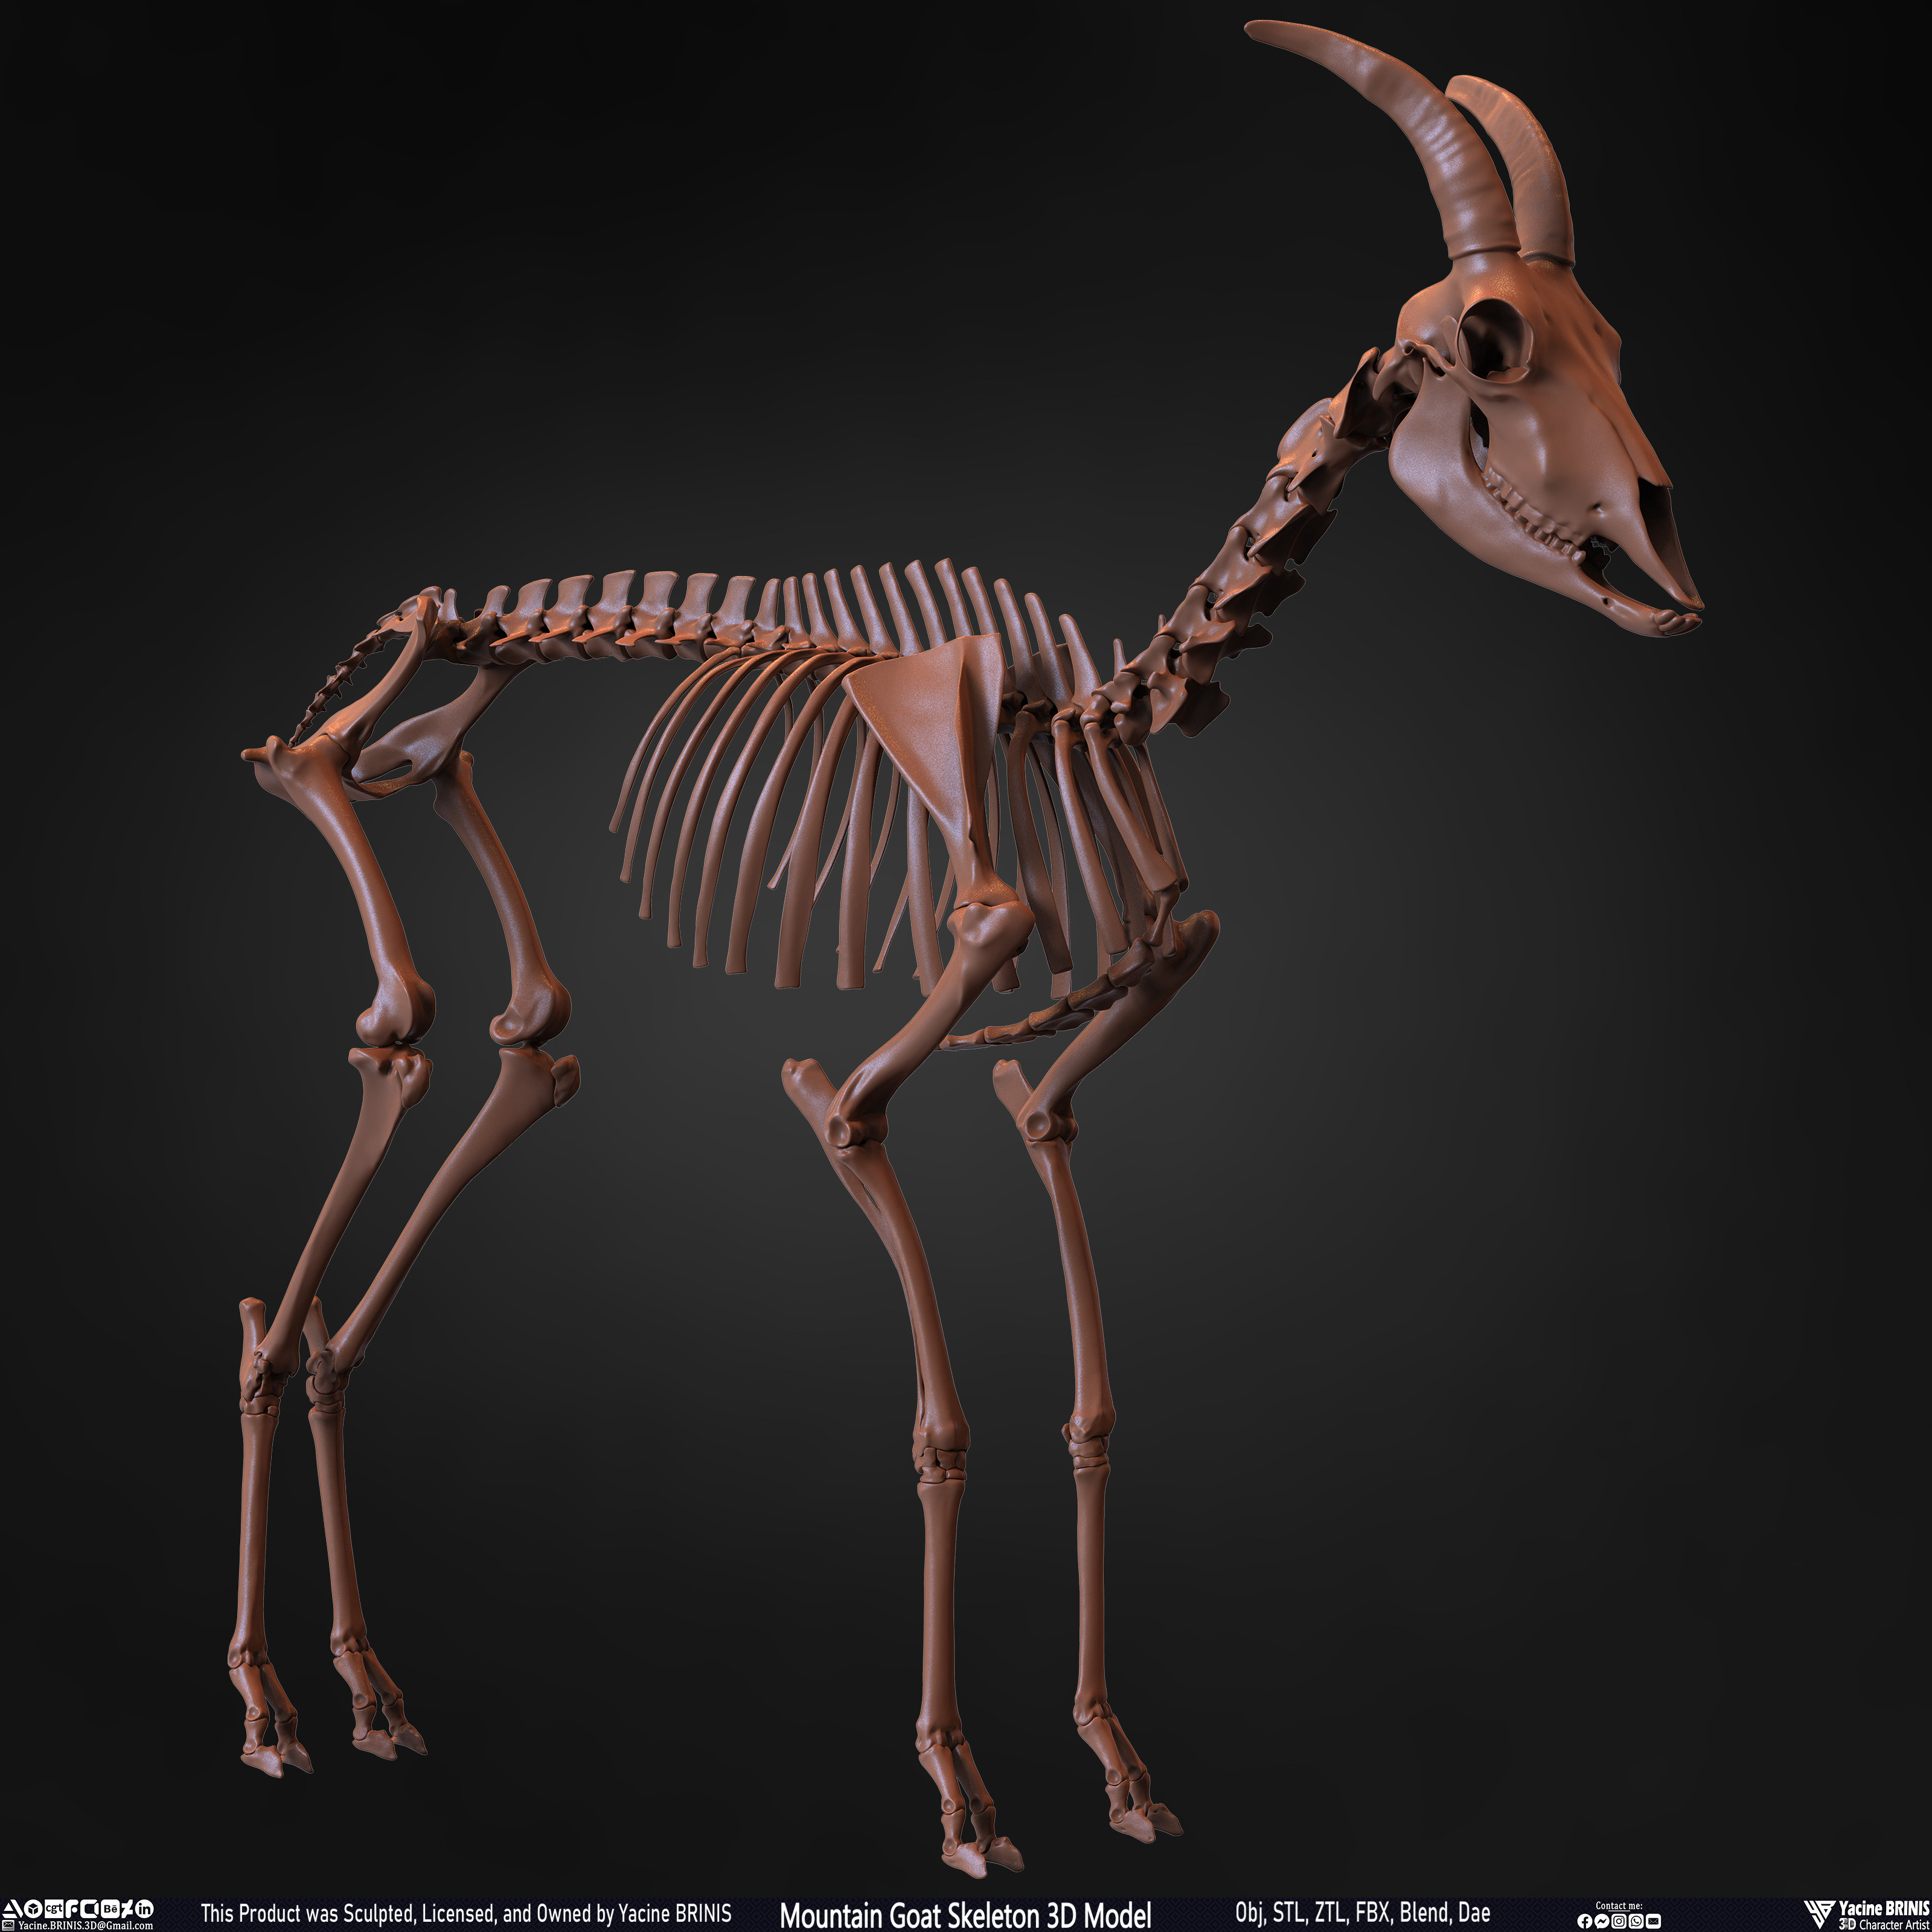 Mountain Goat Skeleton 3D Model Sculpted by Yacine BRINIS Set 026